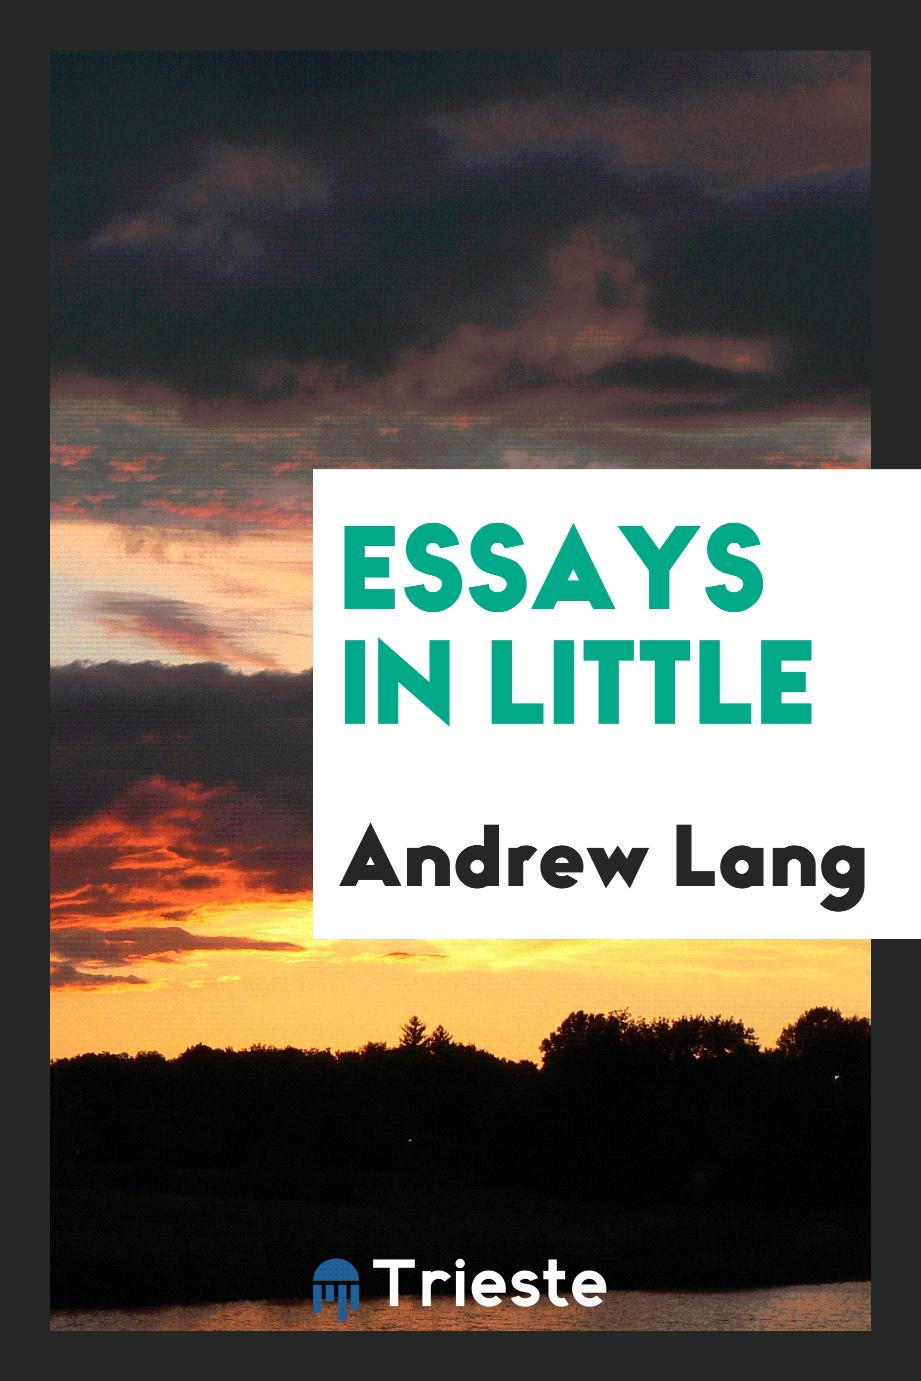 Andrew Lang - Essays in Little